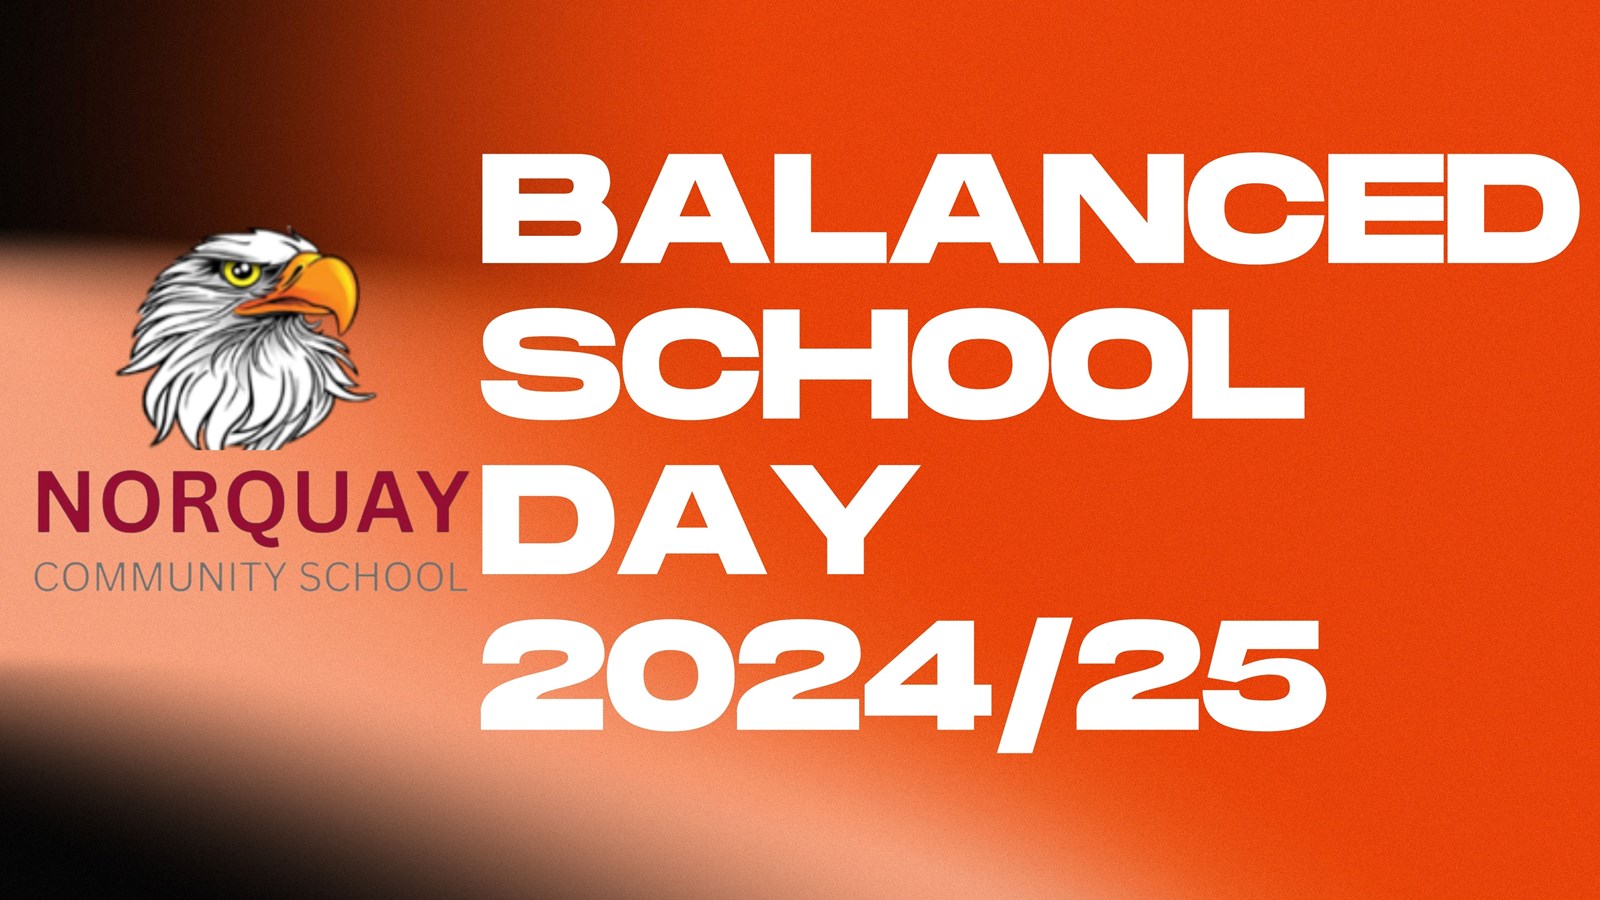 Balanced School Day